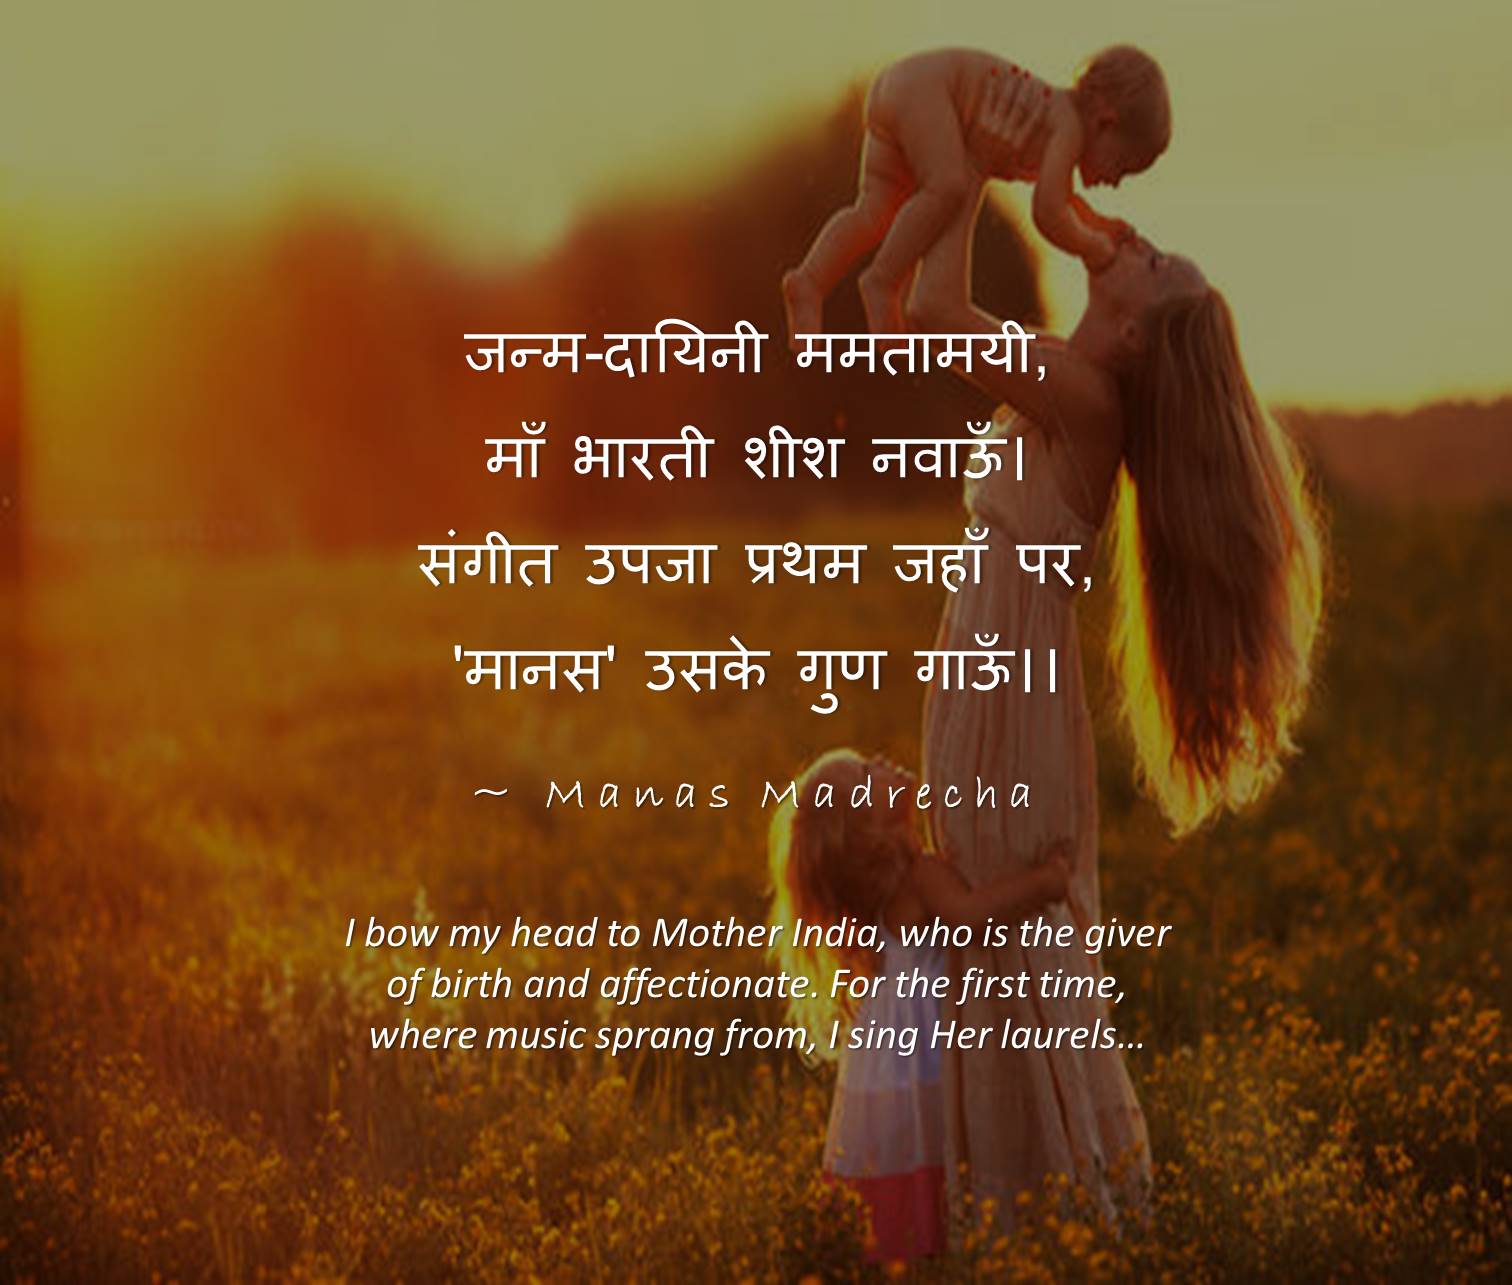 Bharat Mata Ki Jai - Hindi Poem on Mother India - भारत पर हिन्दी कविता ...